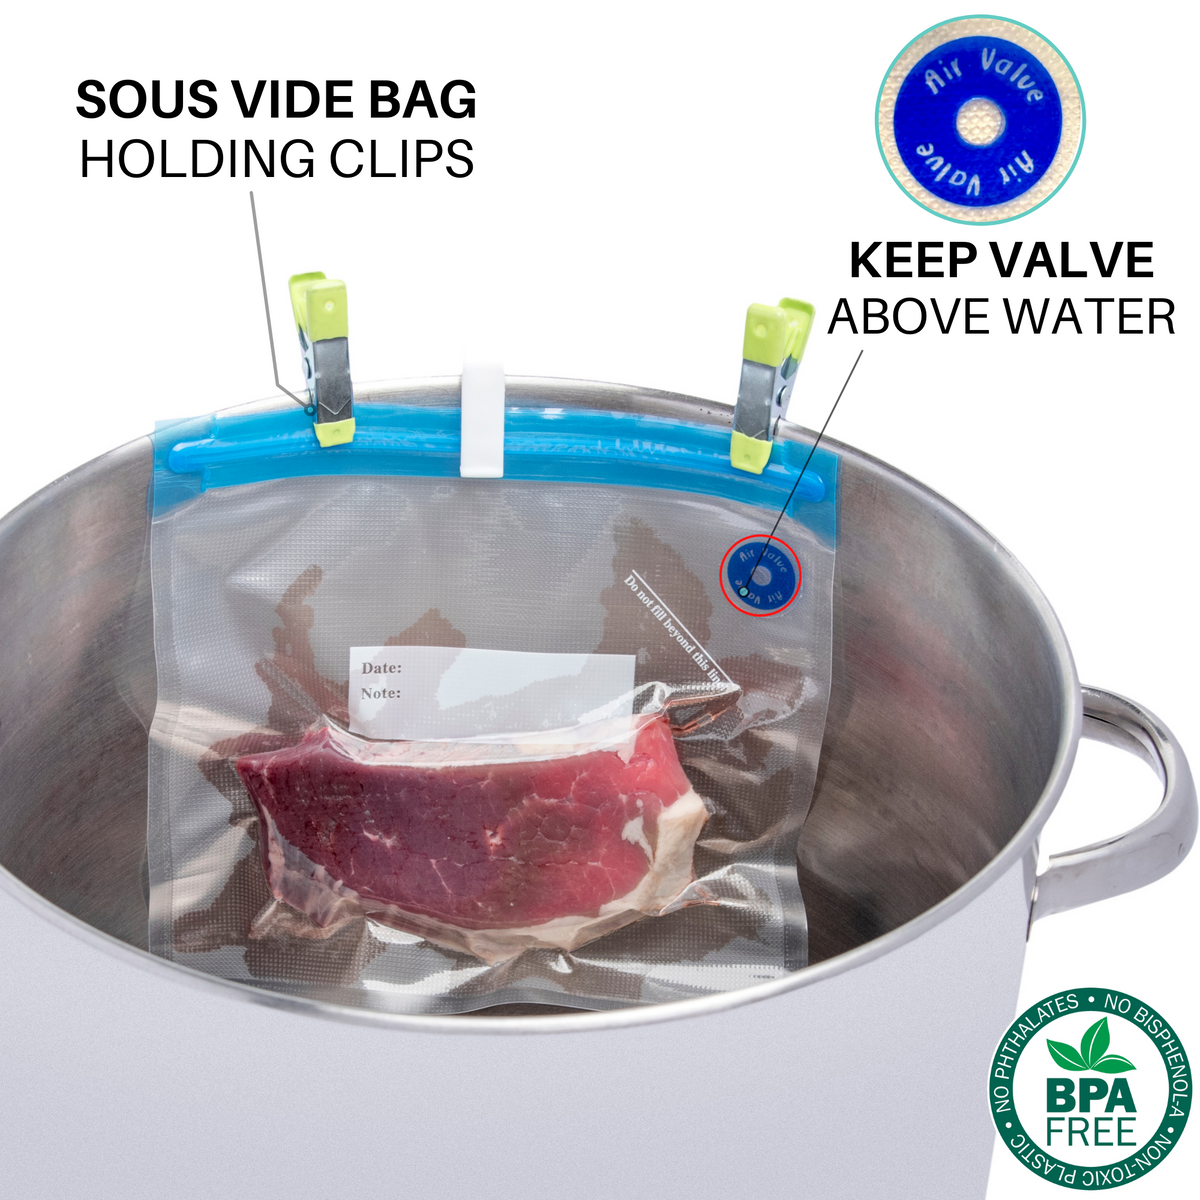 O2frepak Reusable Sous Vide Bags 15 Pcs Zip Lock Bag for Food Storage with 2 Sealing Clips, Men's, Size: O2(15pcs)